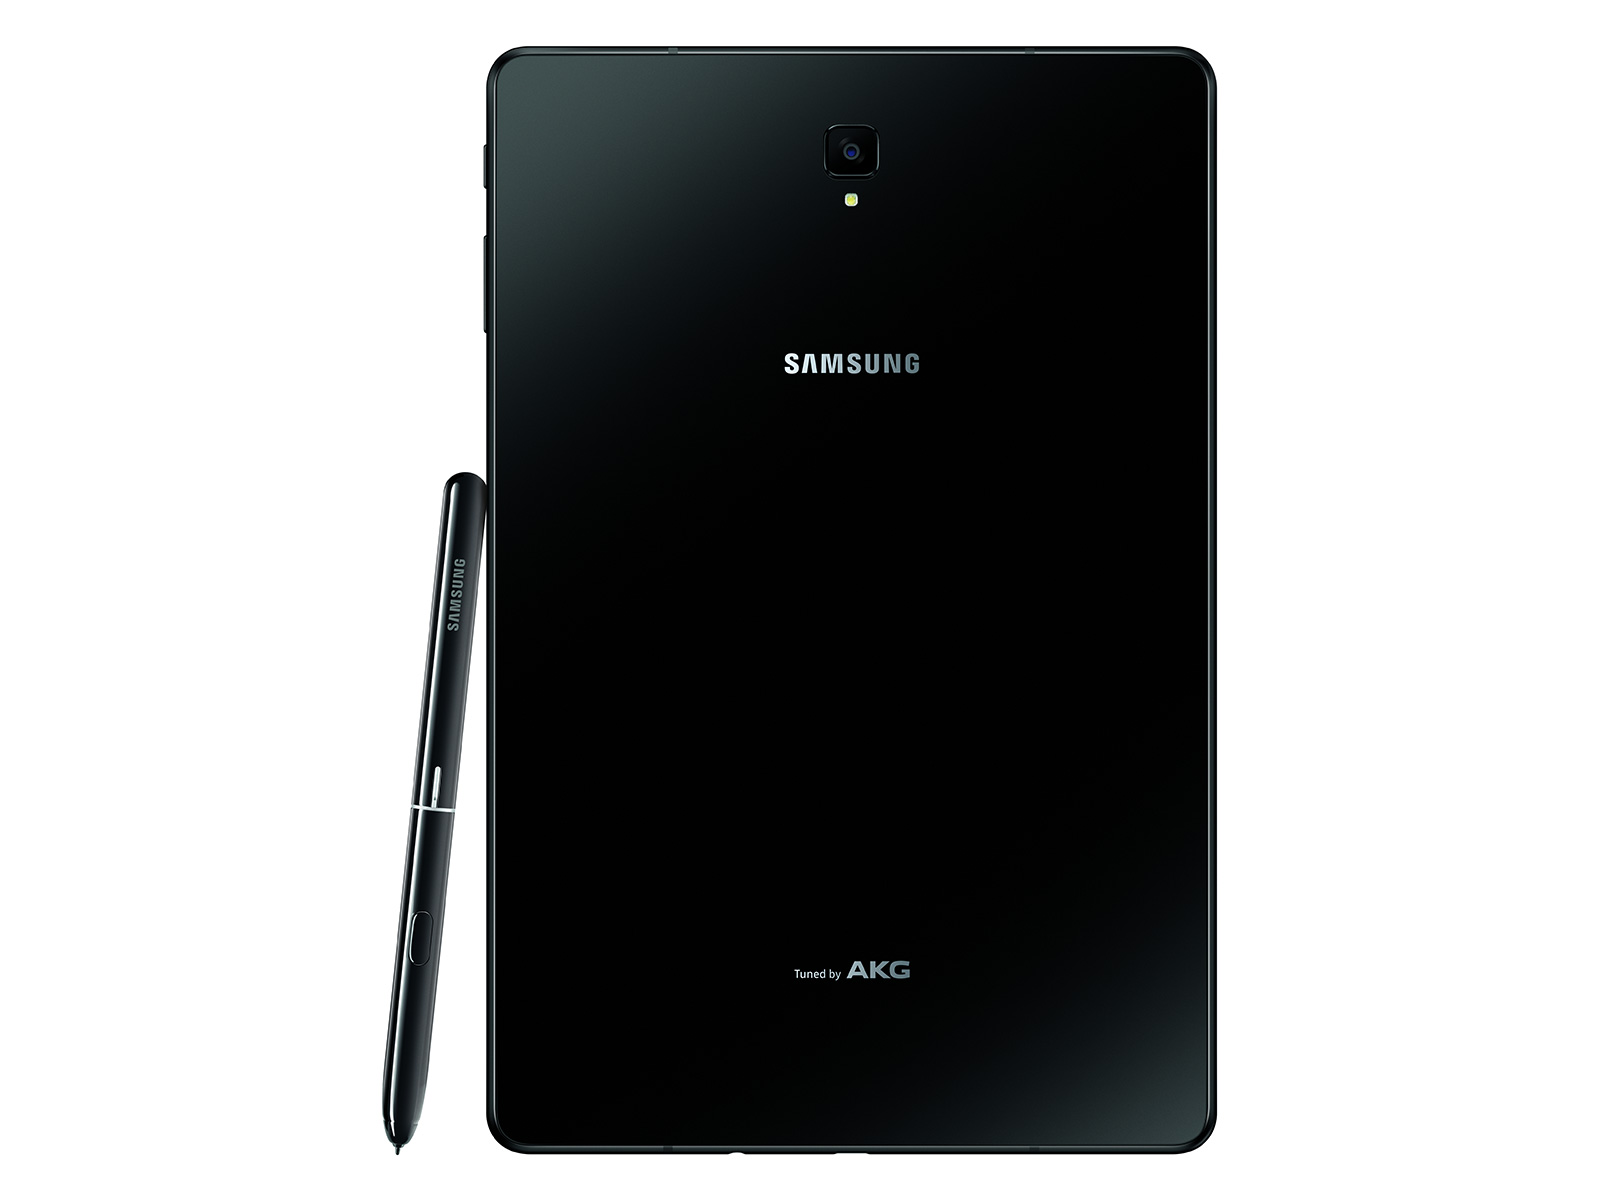 Galaxy Tab S4 10.5” (S Pen included), 64GB, Black, Verizon Tablets 